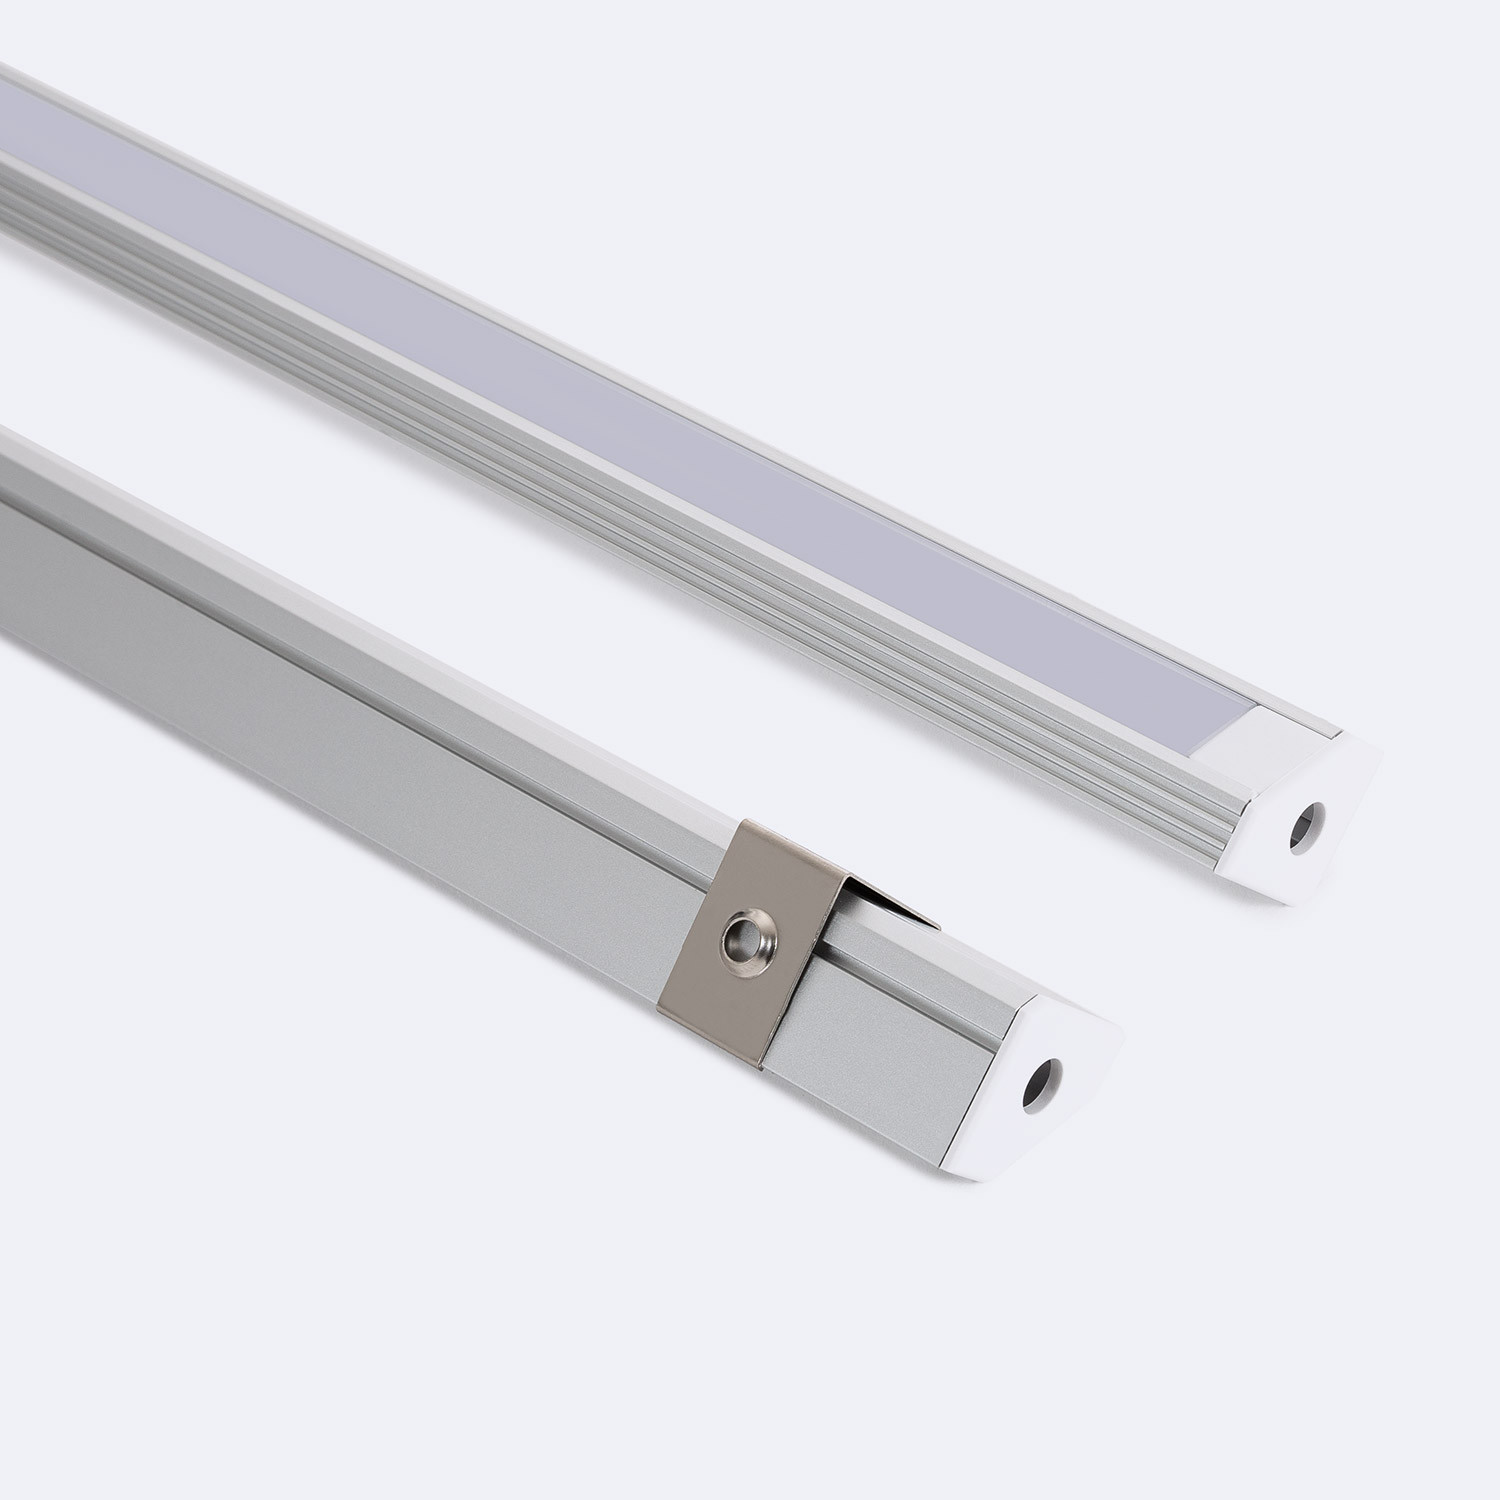 Perfil triangular aluminio para tiras LED de 11mm ancho máx. 2m